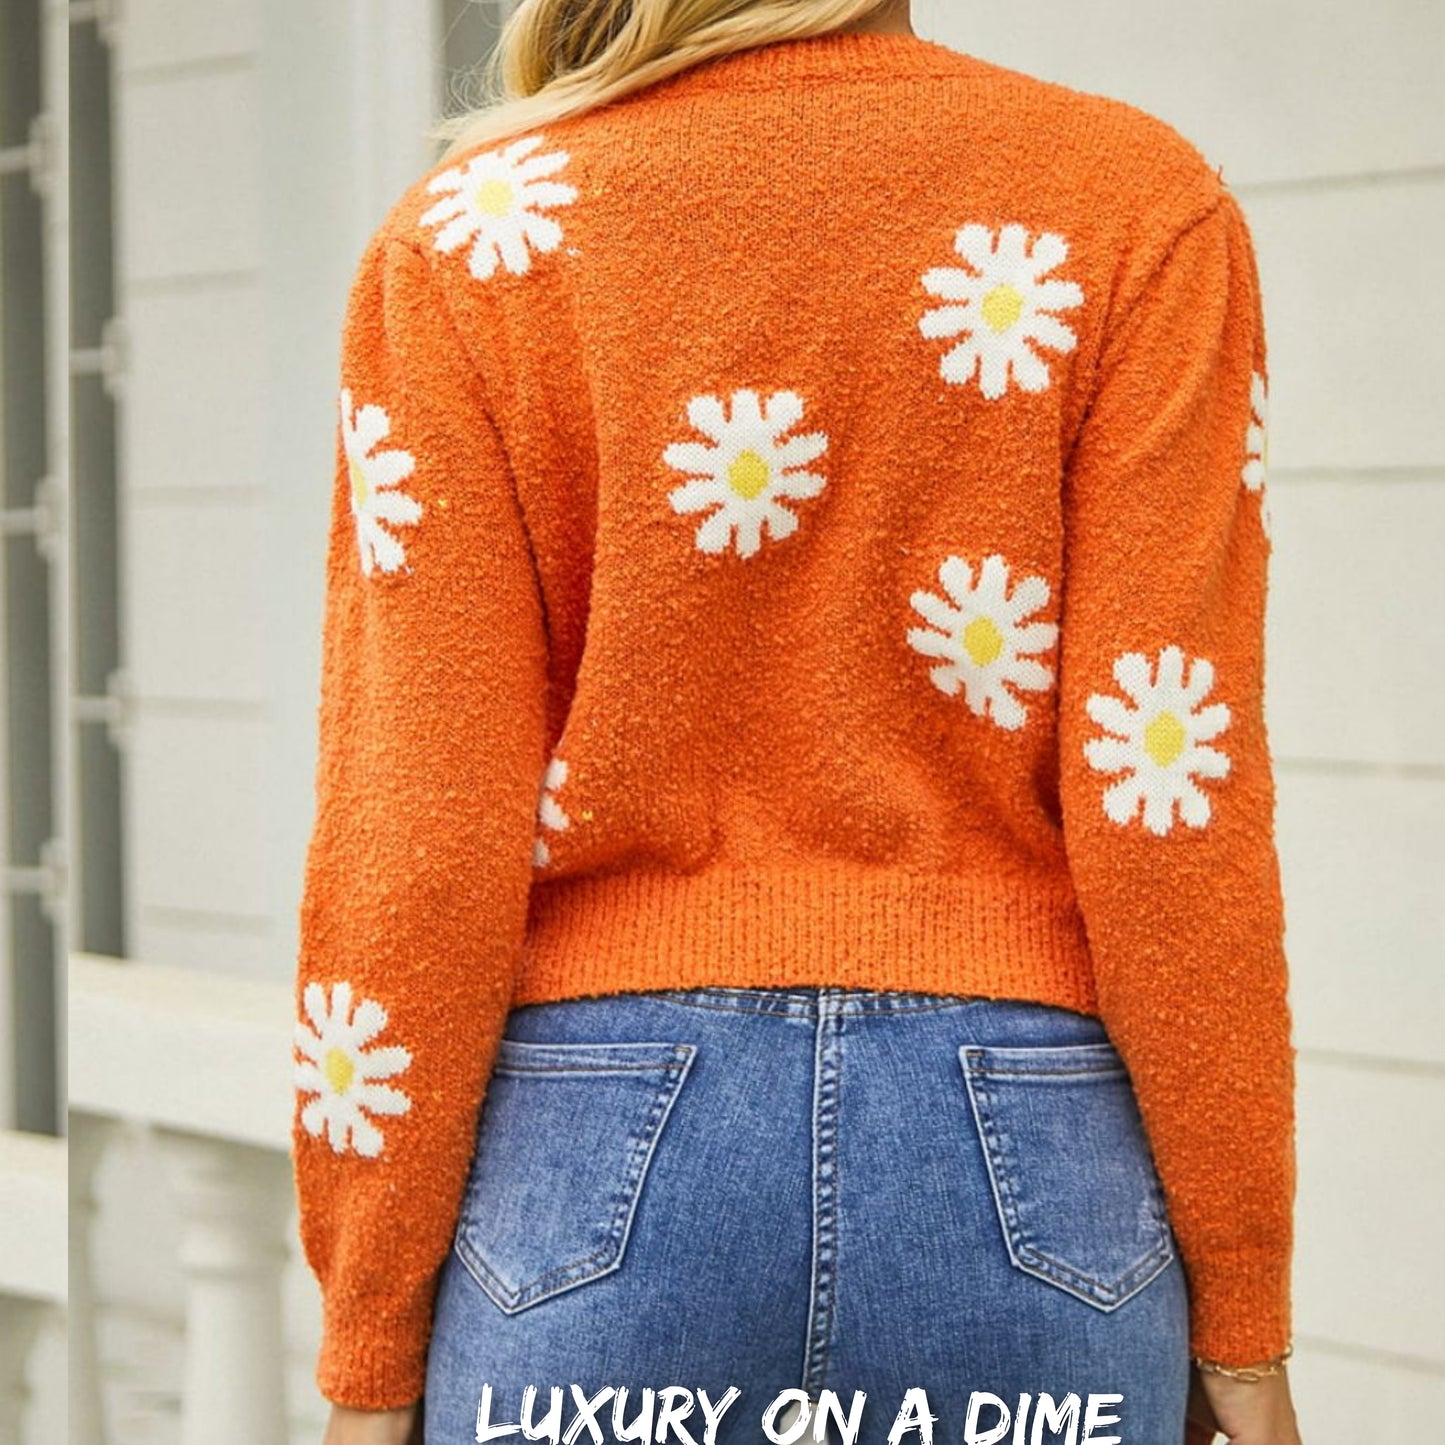 Retro Daisy Soft Knit Flower Long Sleeve Pullover Sweater Shirt